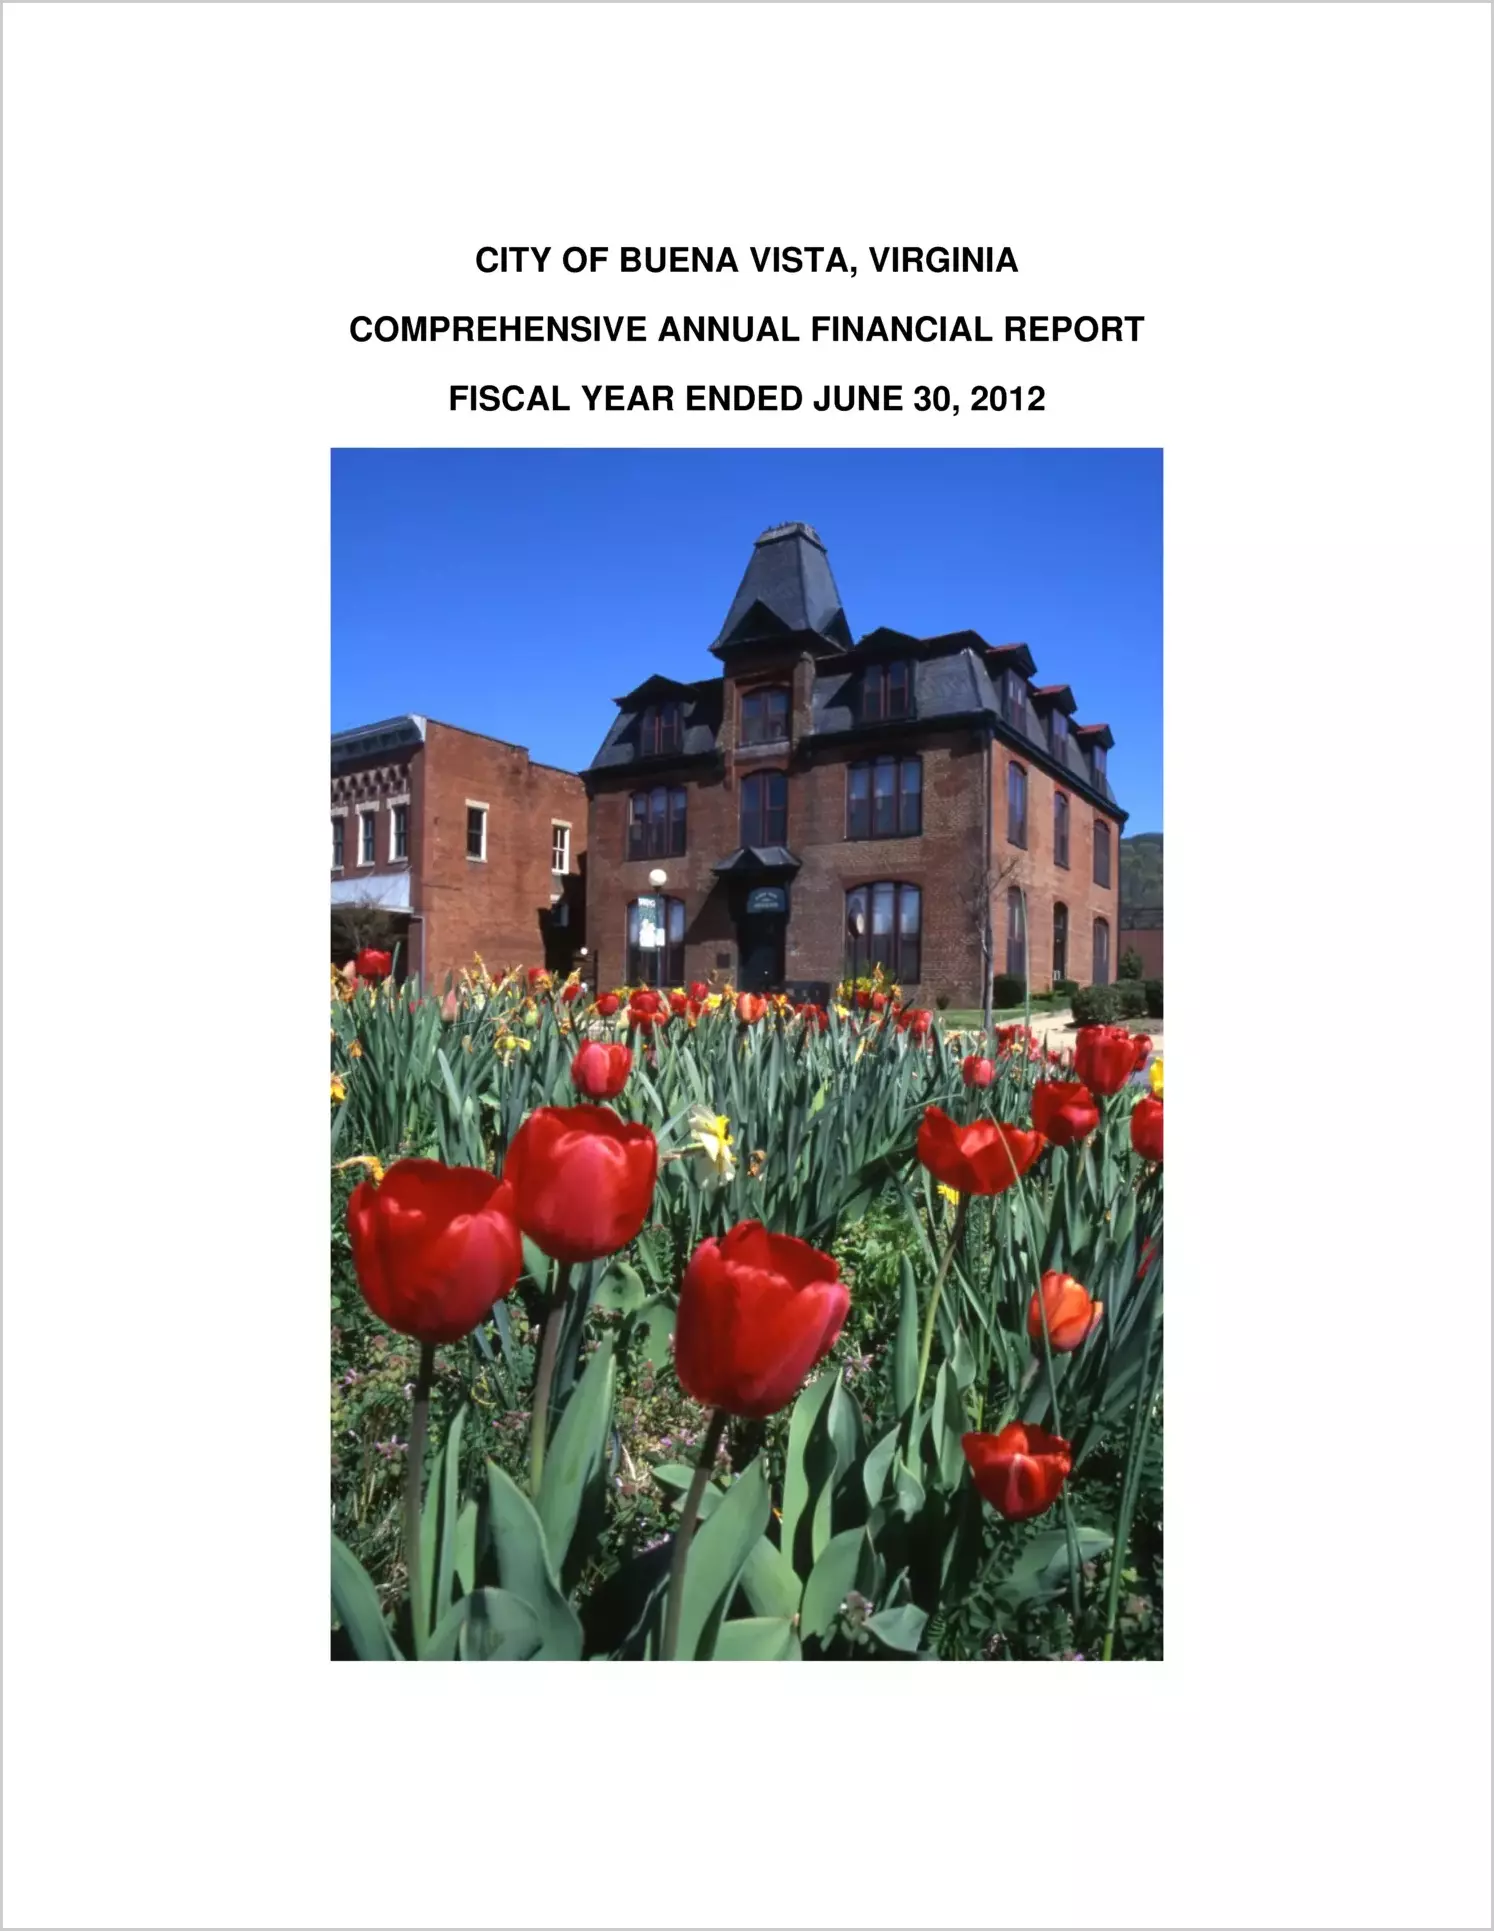 2012 Annual Financial Report for City of Buena Vista